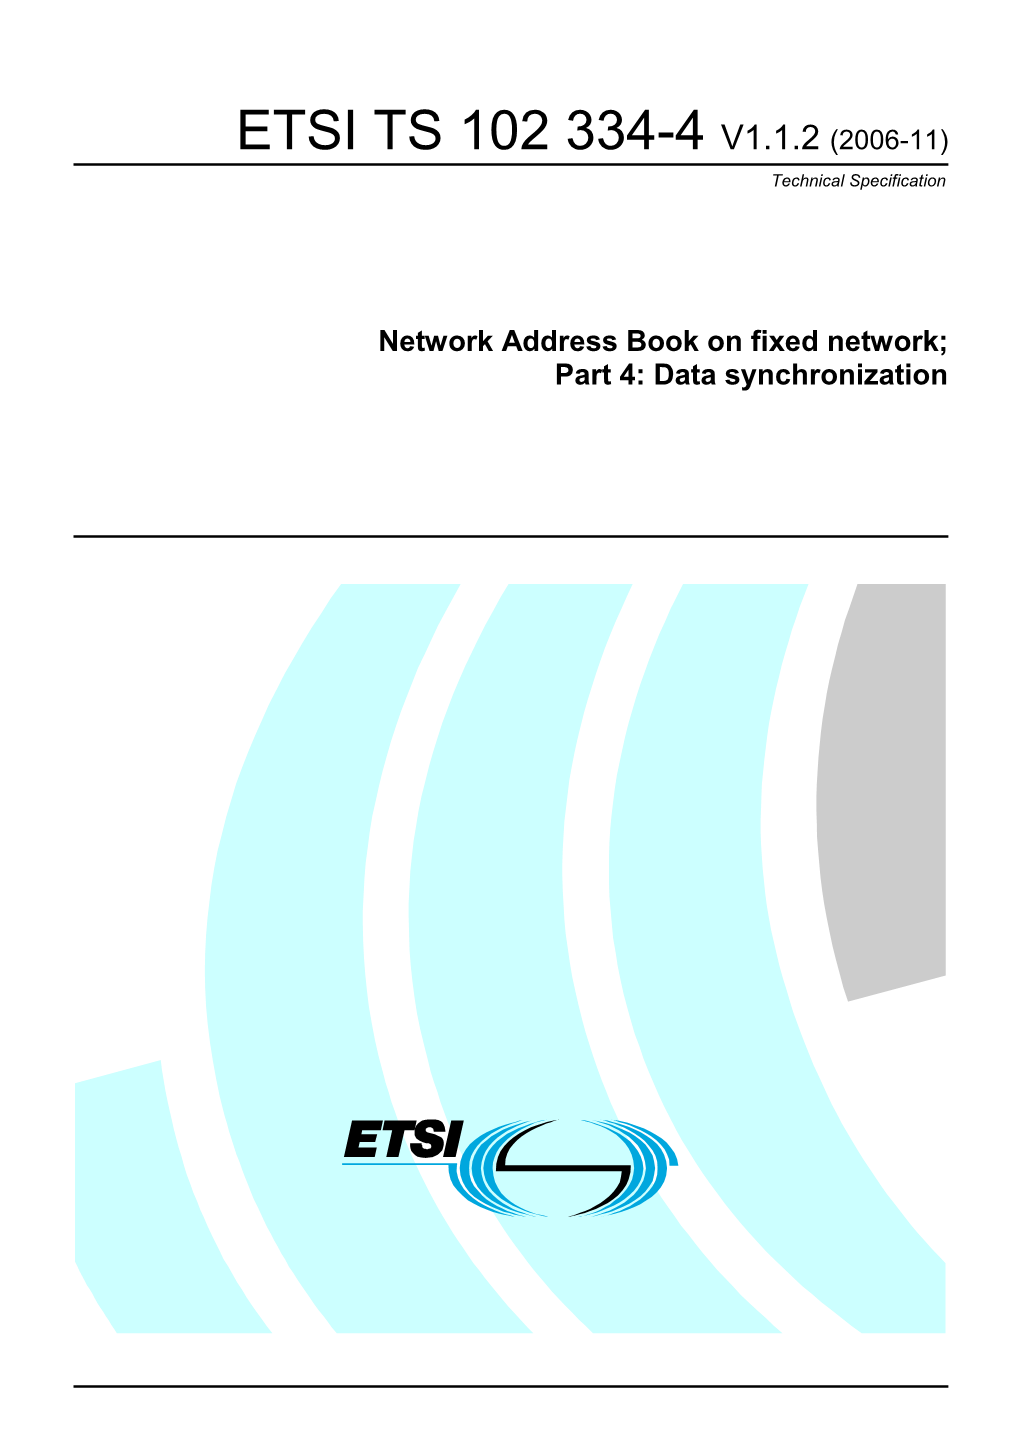 ETSI TS 102 334-4 V1.1.2 (2006-11) Technical Specification